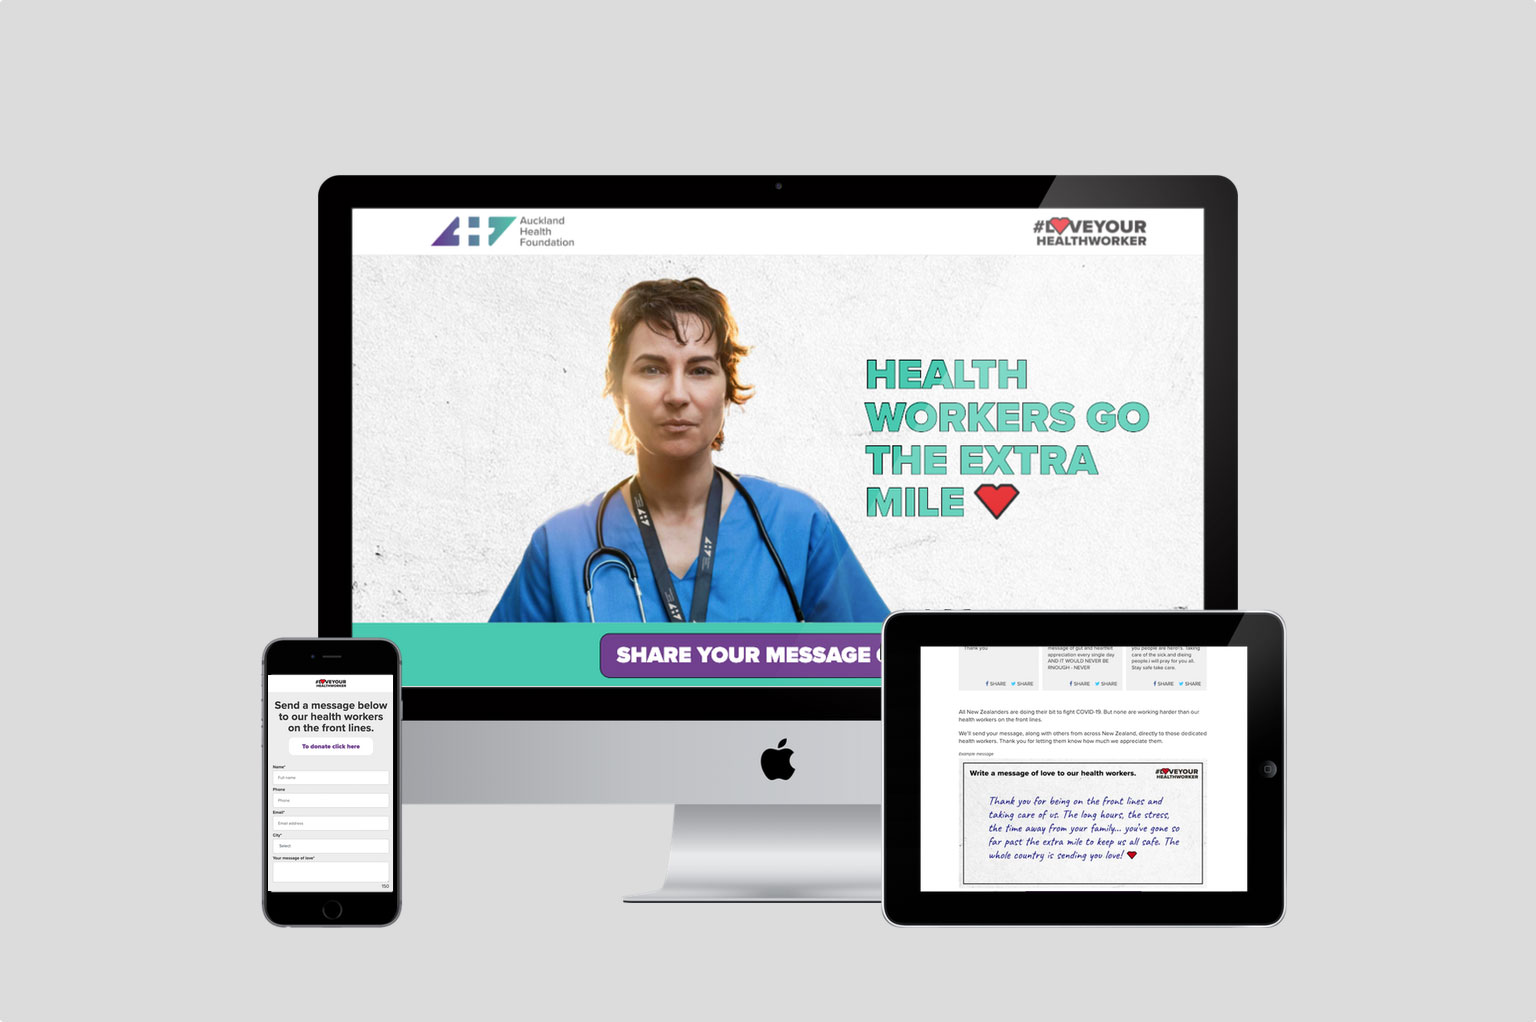 Auckland Health Foundation Australia Digital Marketing - Marlin Communications